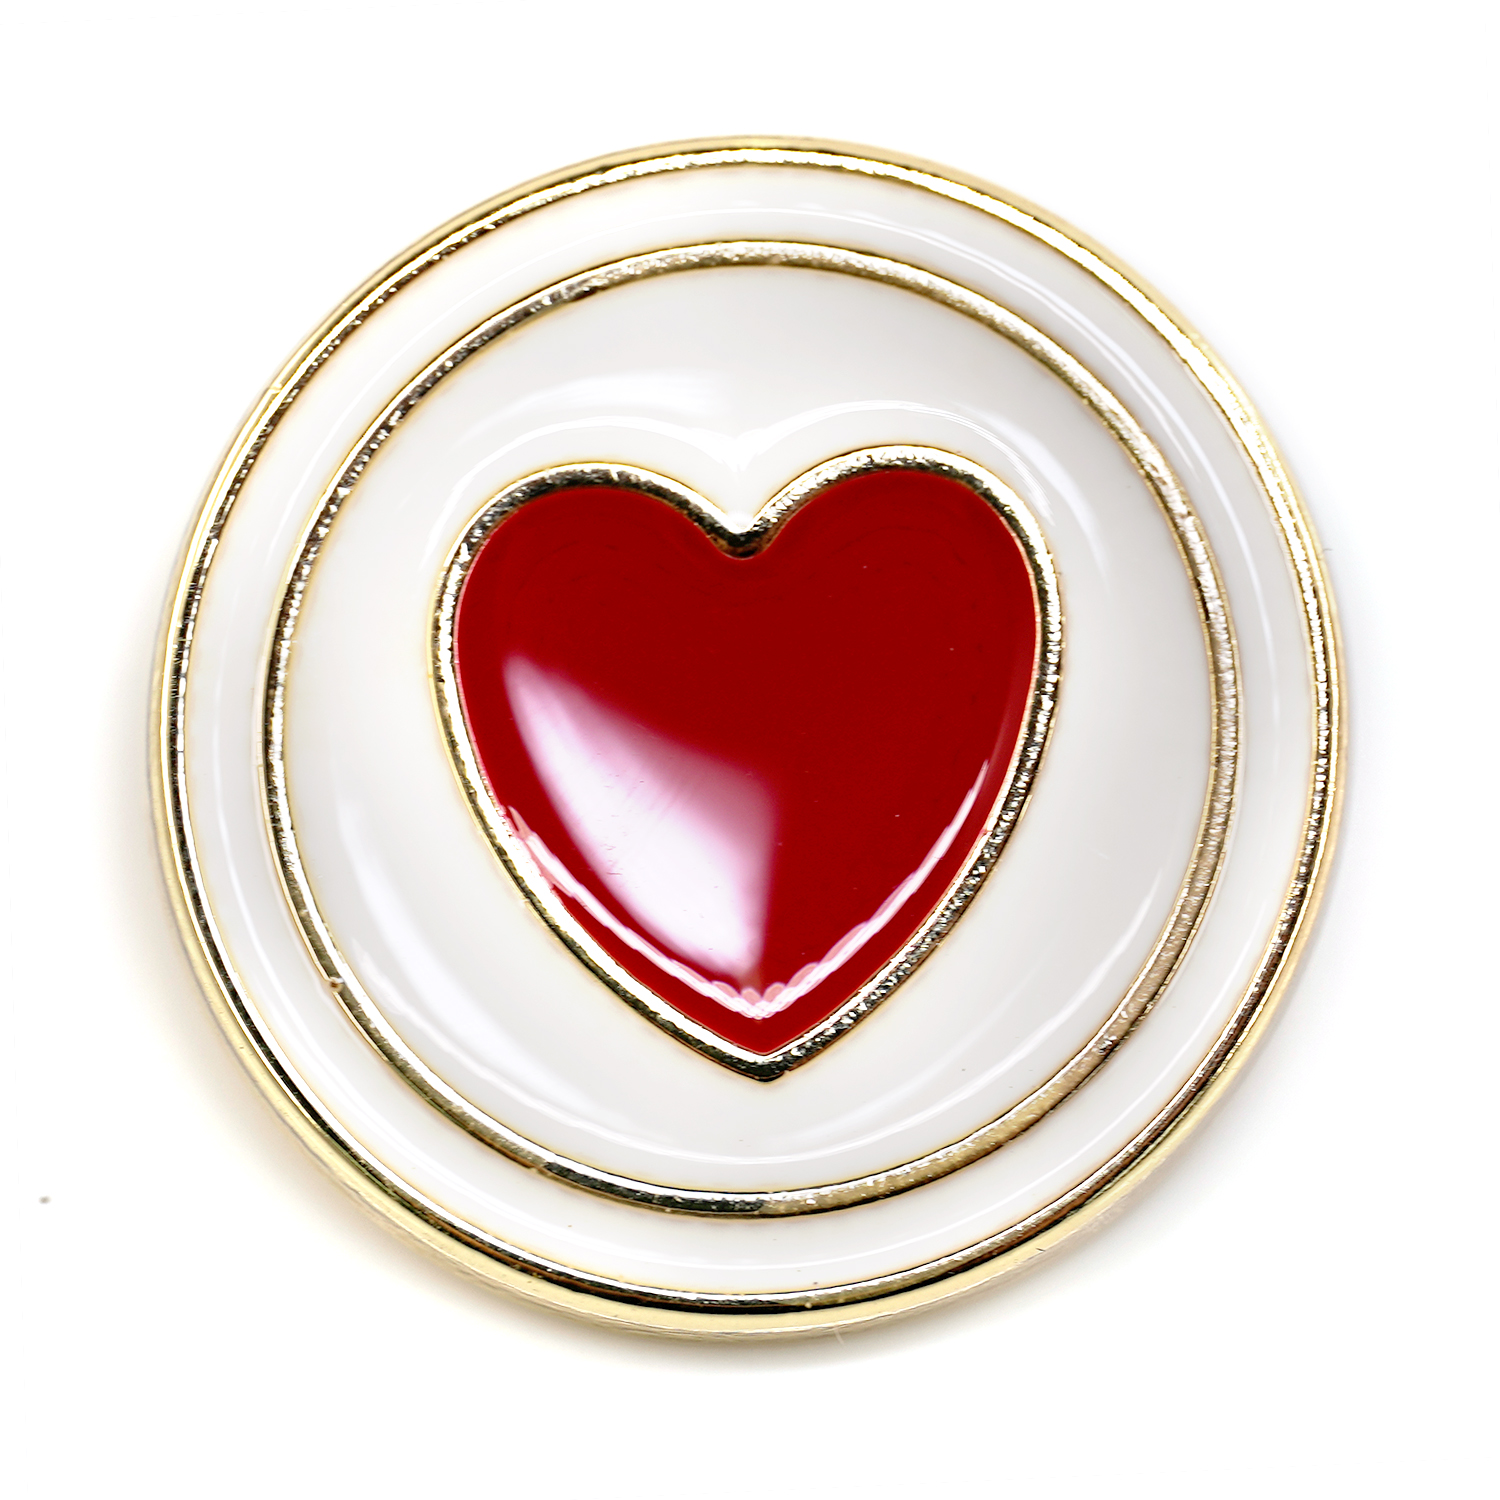 Craftisum 20 pcs Electroplating Golden Circles Enamel Red Heart Sewing Metal Shank Coat Buttons -25mm -1"